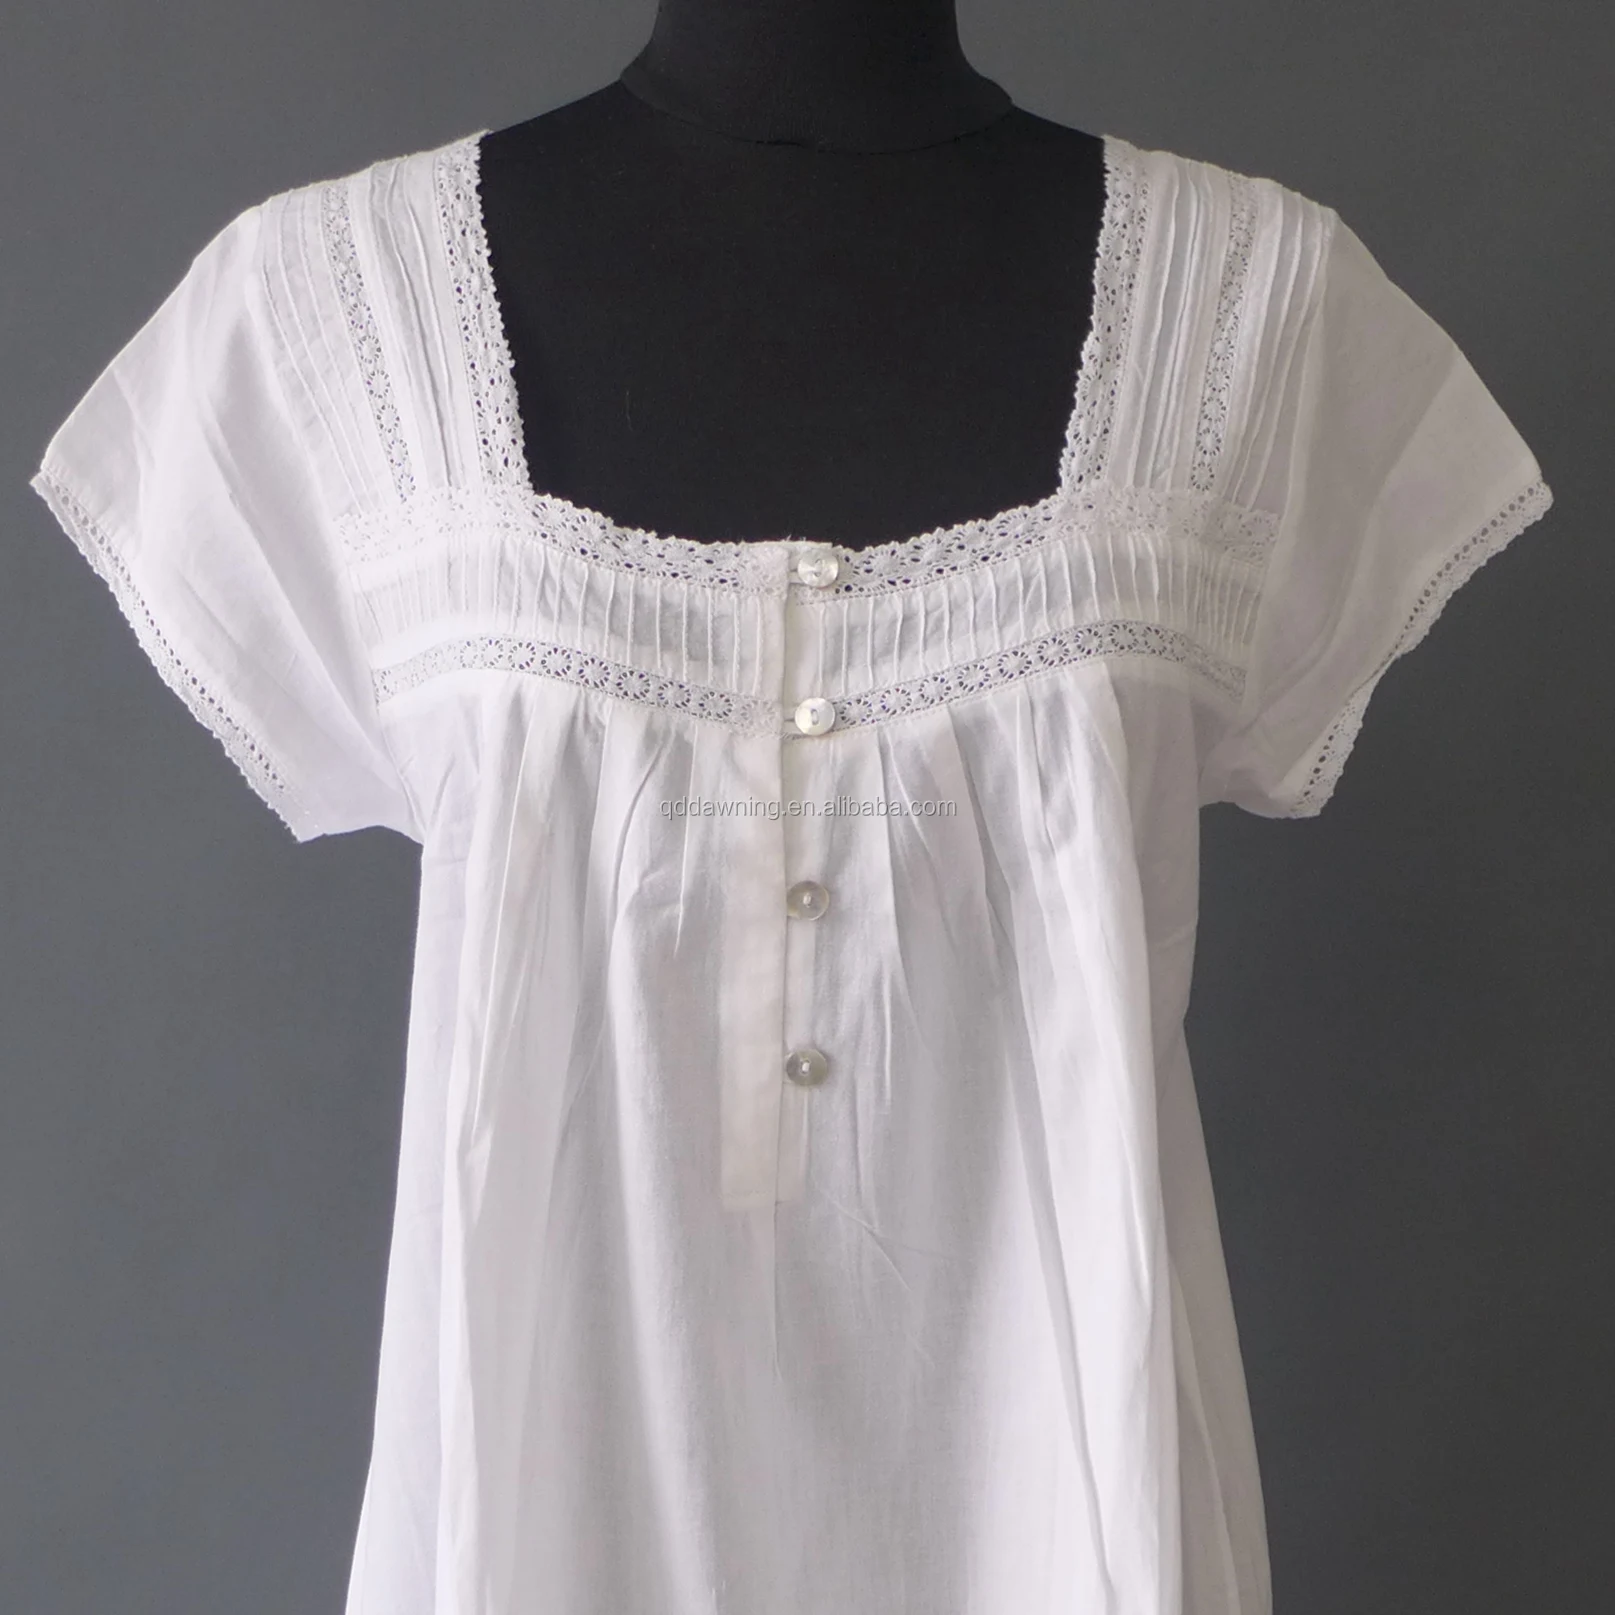 White Cotton Pintuck Nightgown - Buy Cotton Nightgown,Nighty,Nightdress ...